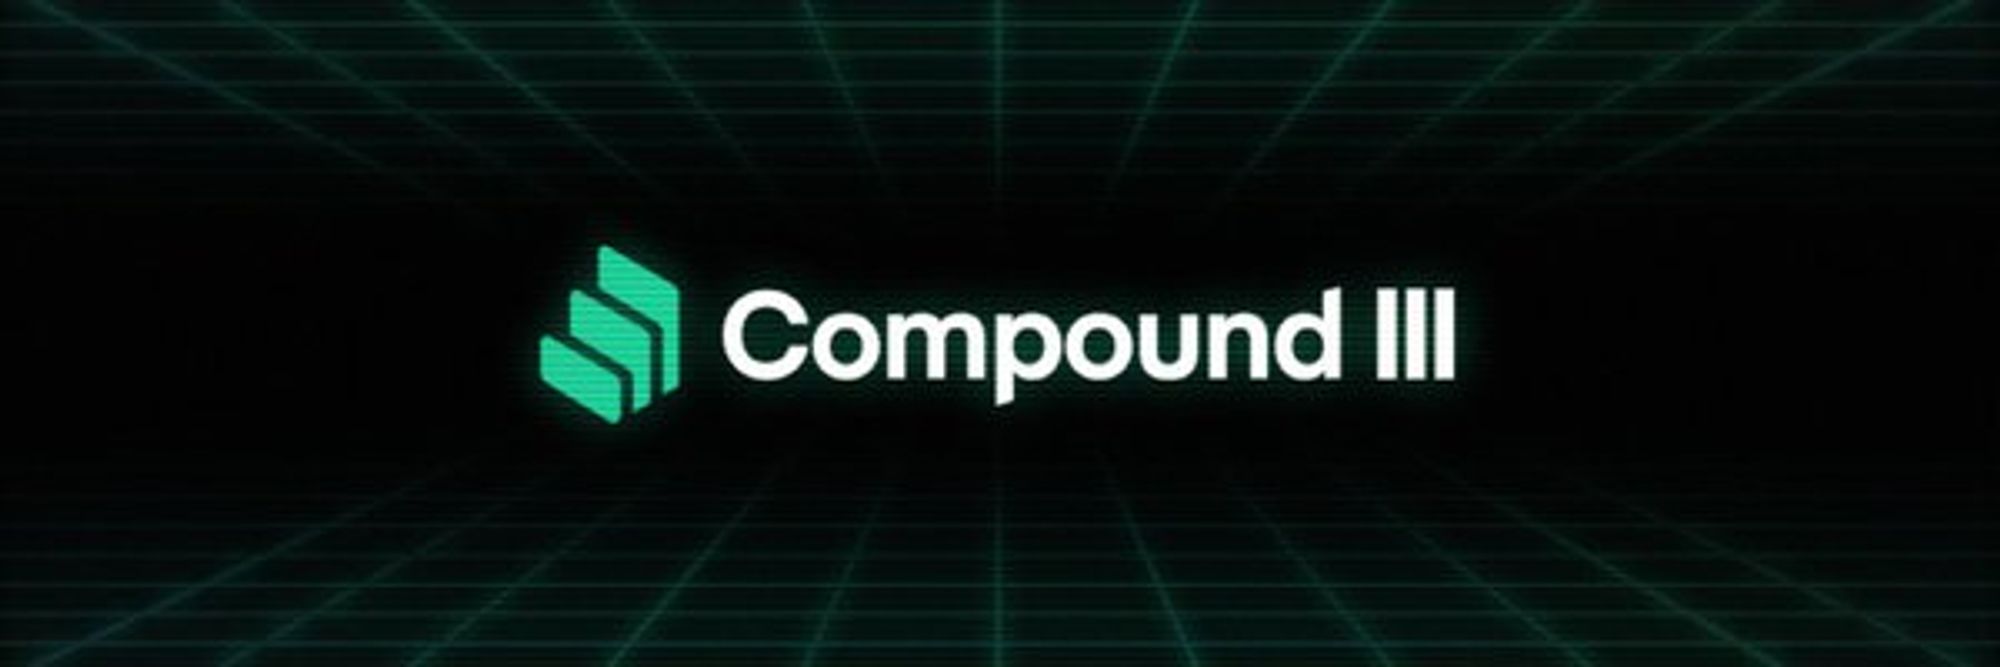 Compound预言机V3升级Bug分析